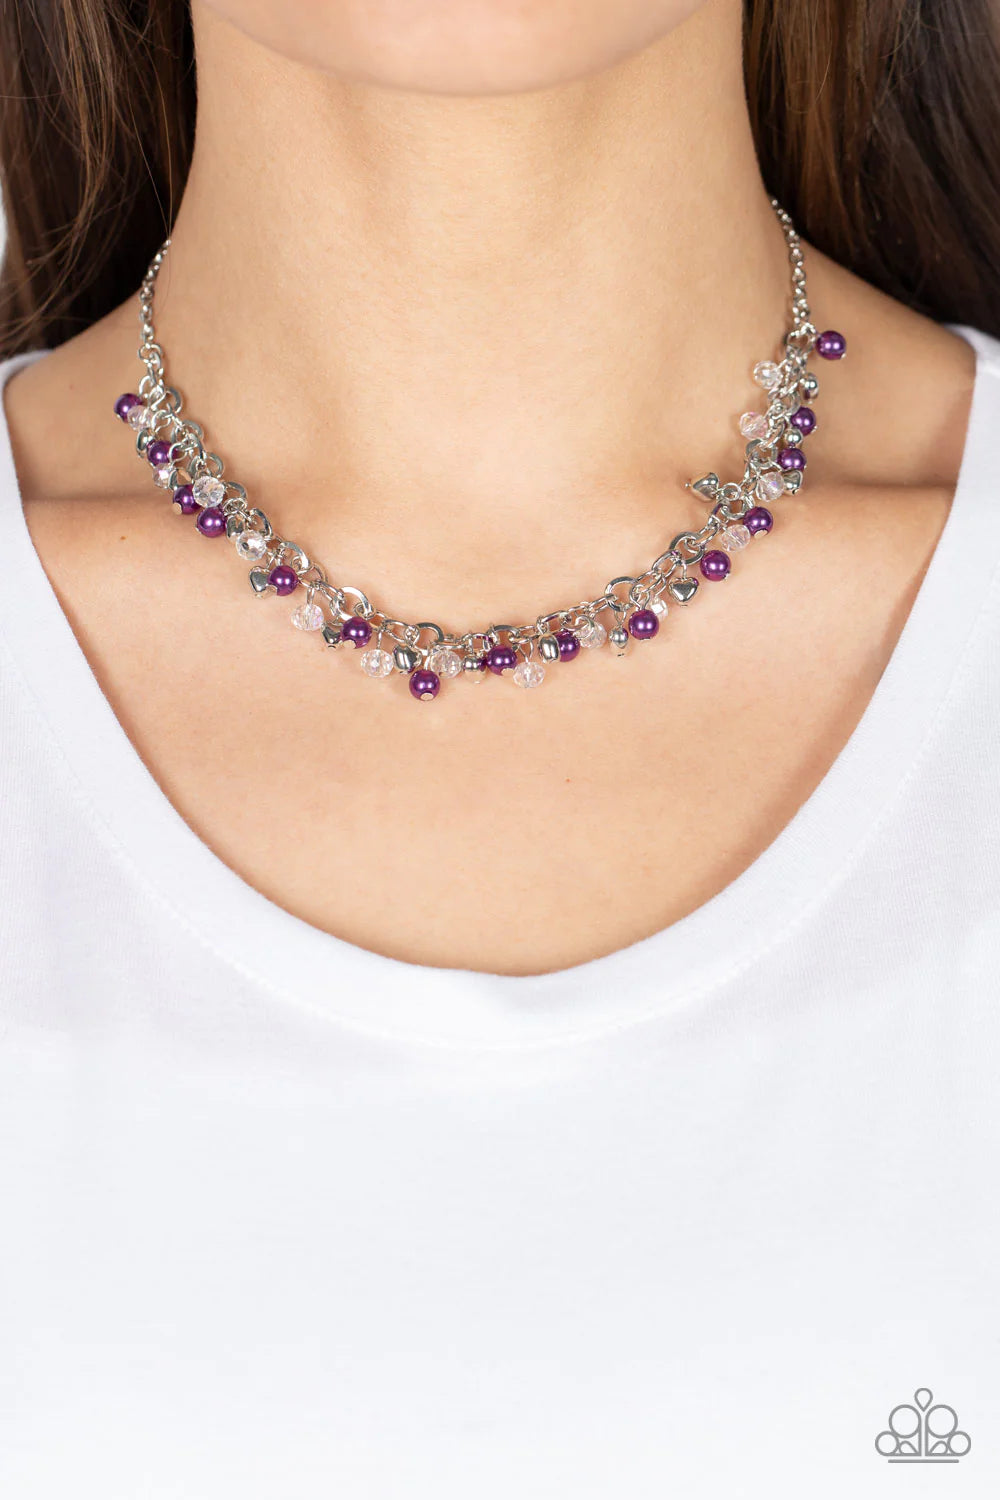 Paparazzi “Soft-Hearted Shimmer” Purple Necklace Earring Set -Cindysblingboutique